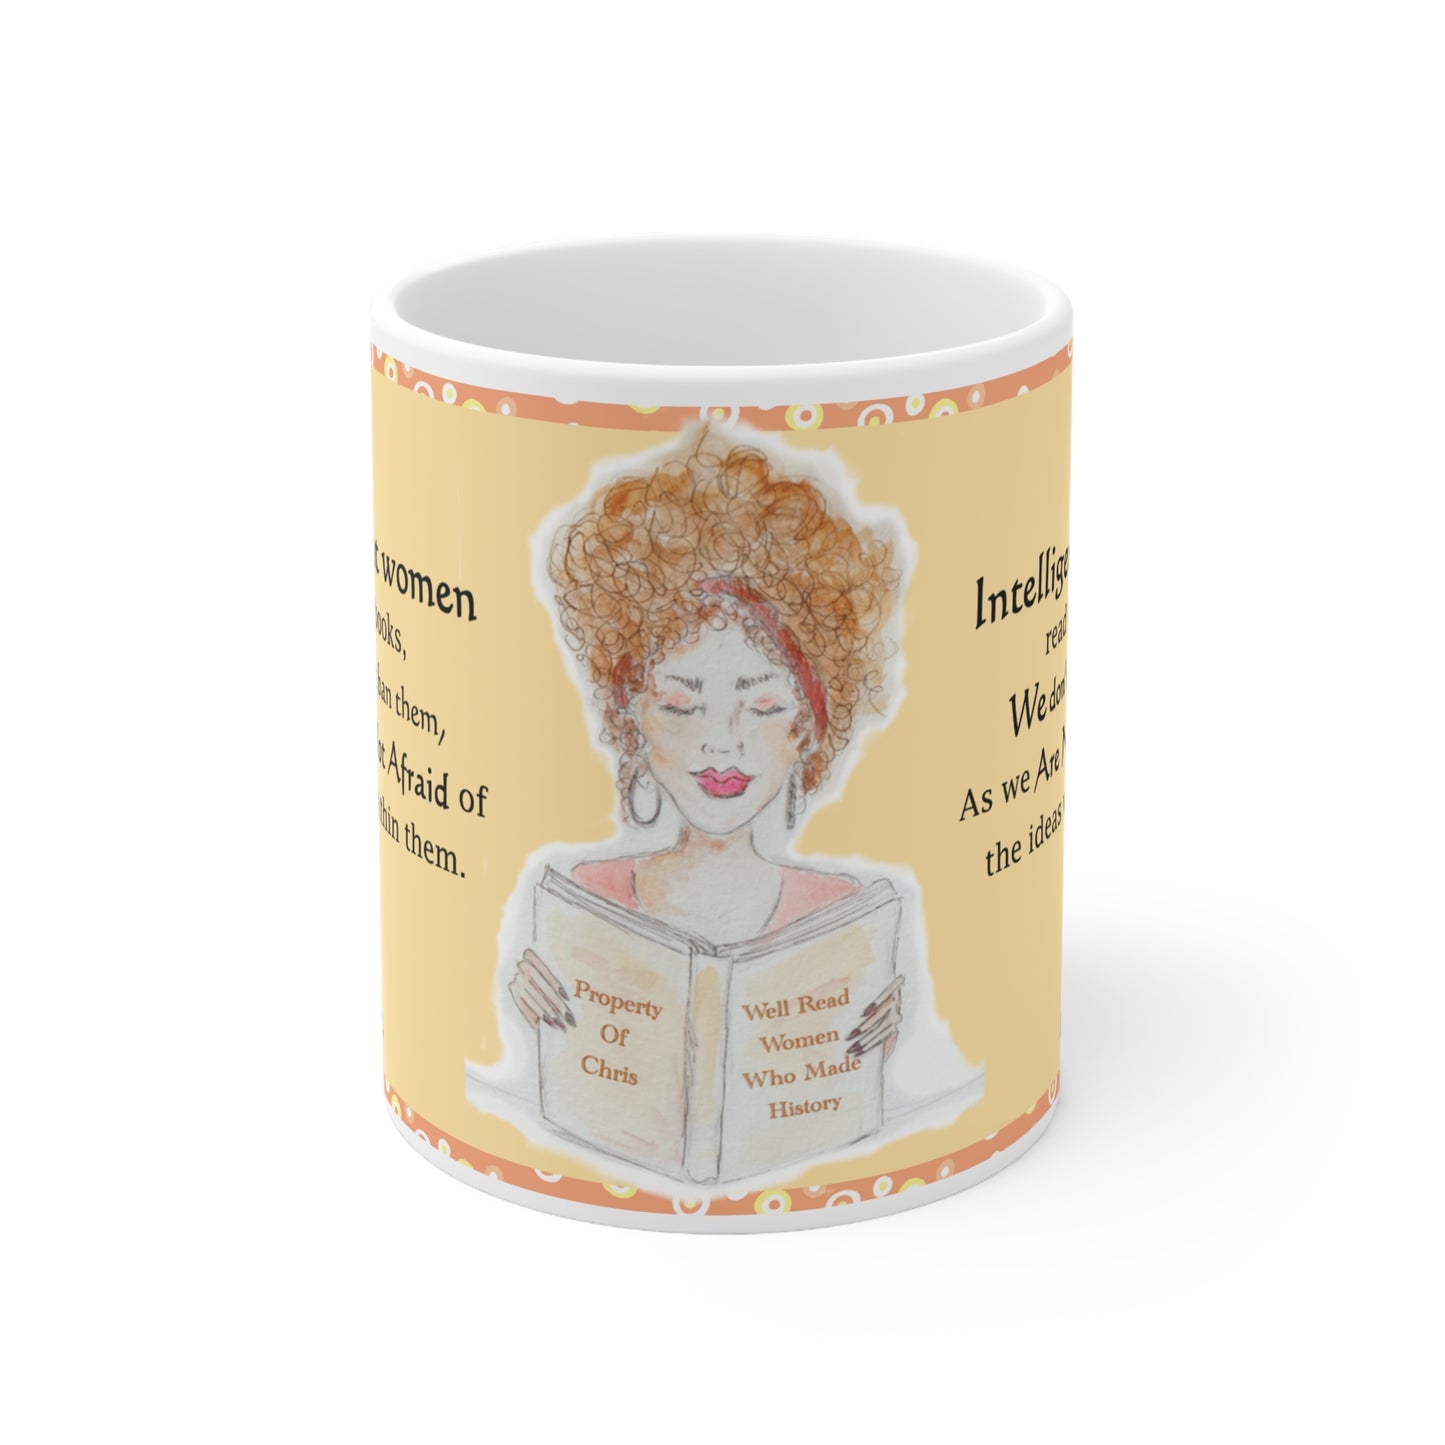 Intelligent Women Read Books  Mug (hbg) Mug